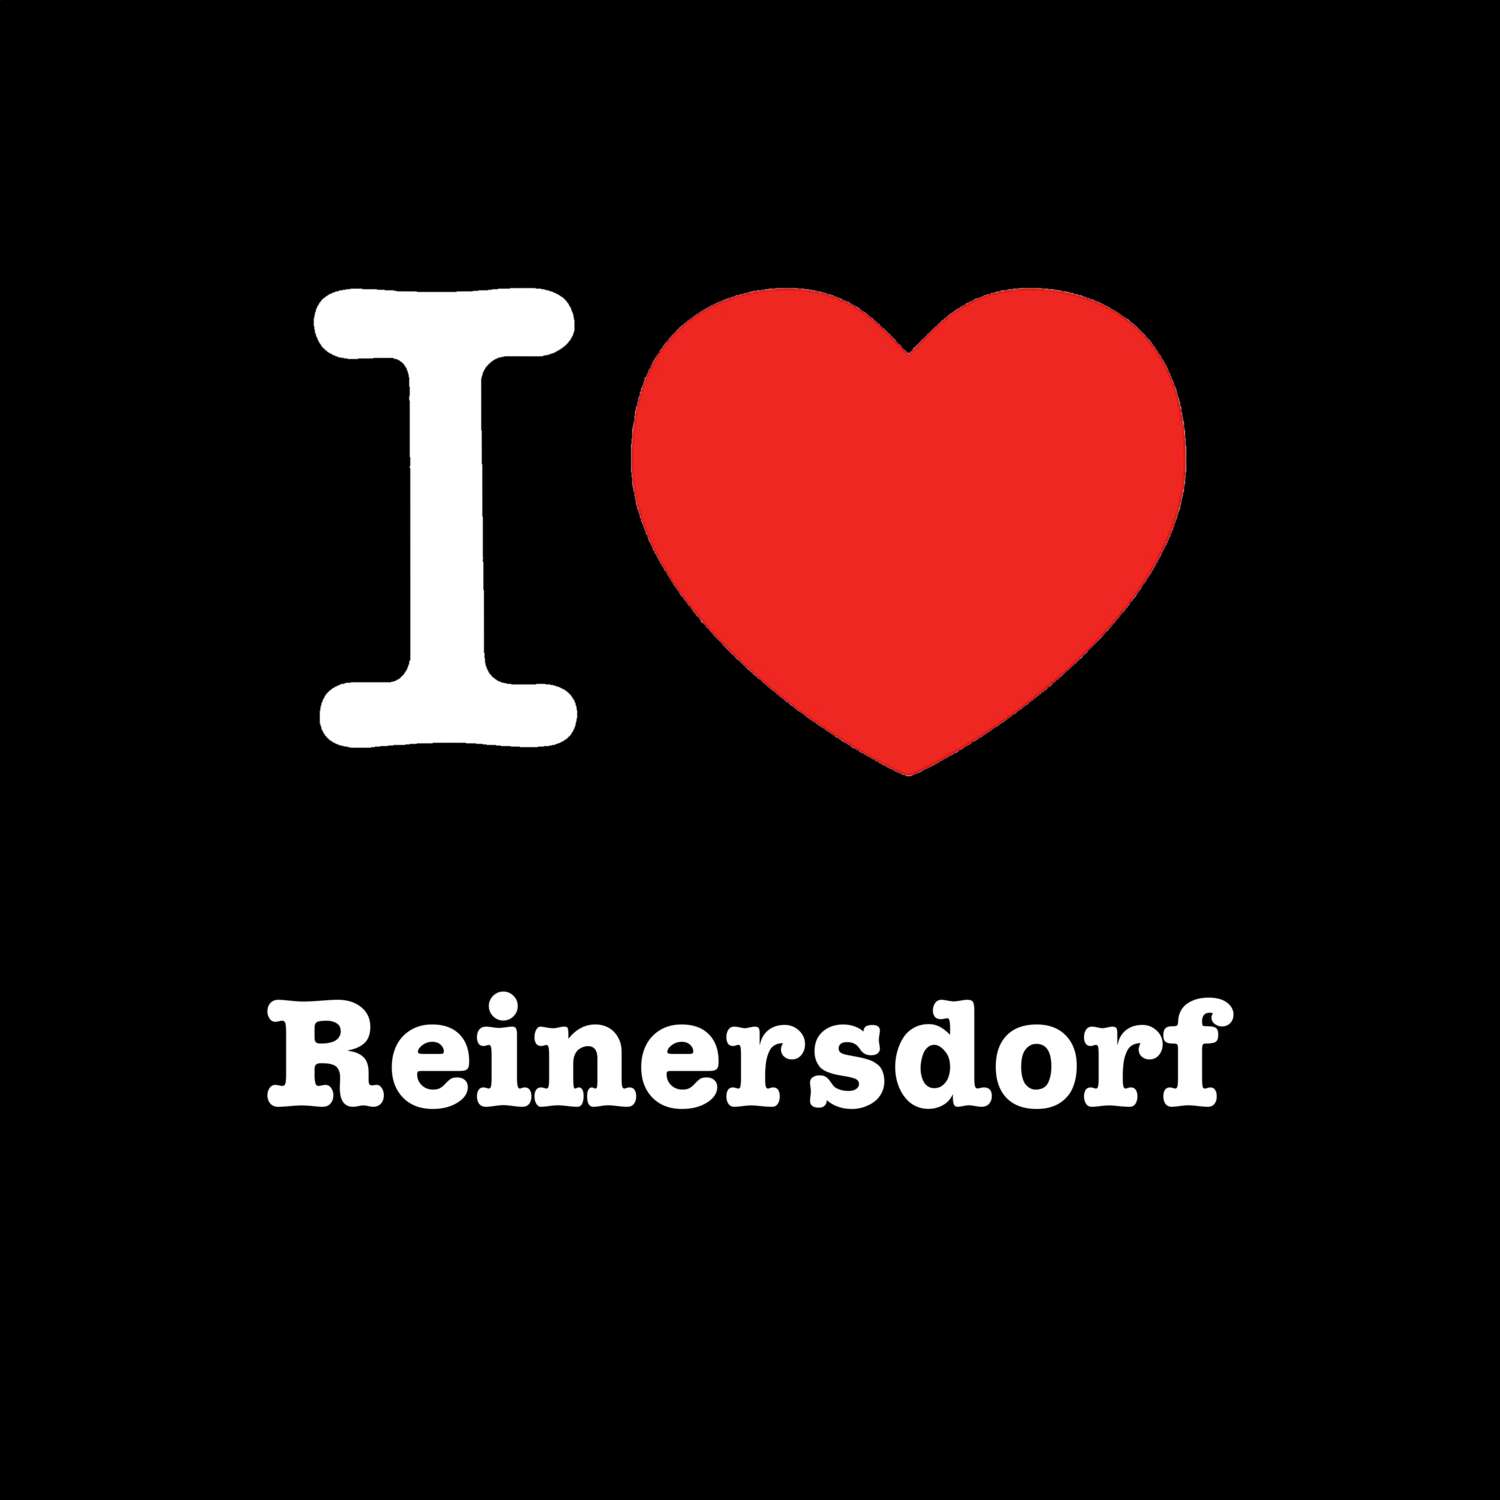 Reinersdorf T-Shirt »I love«